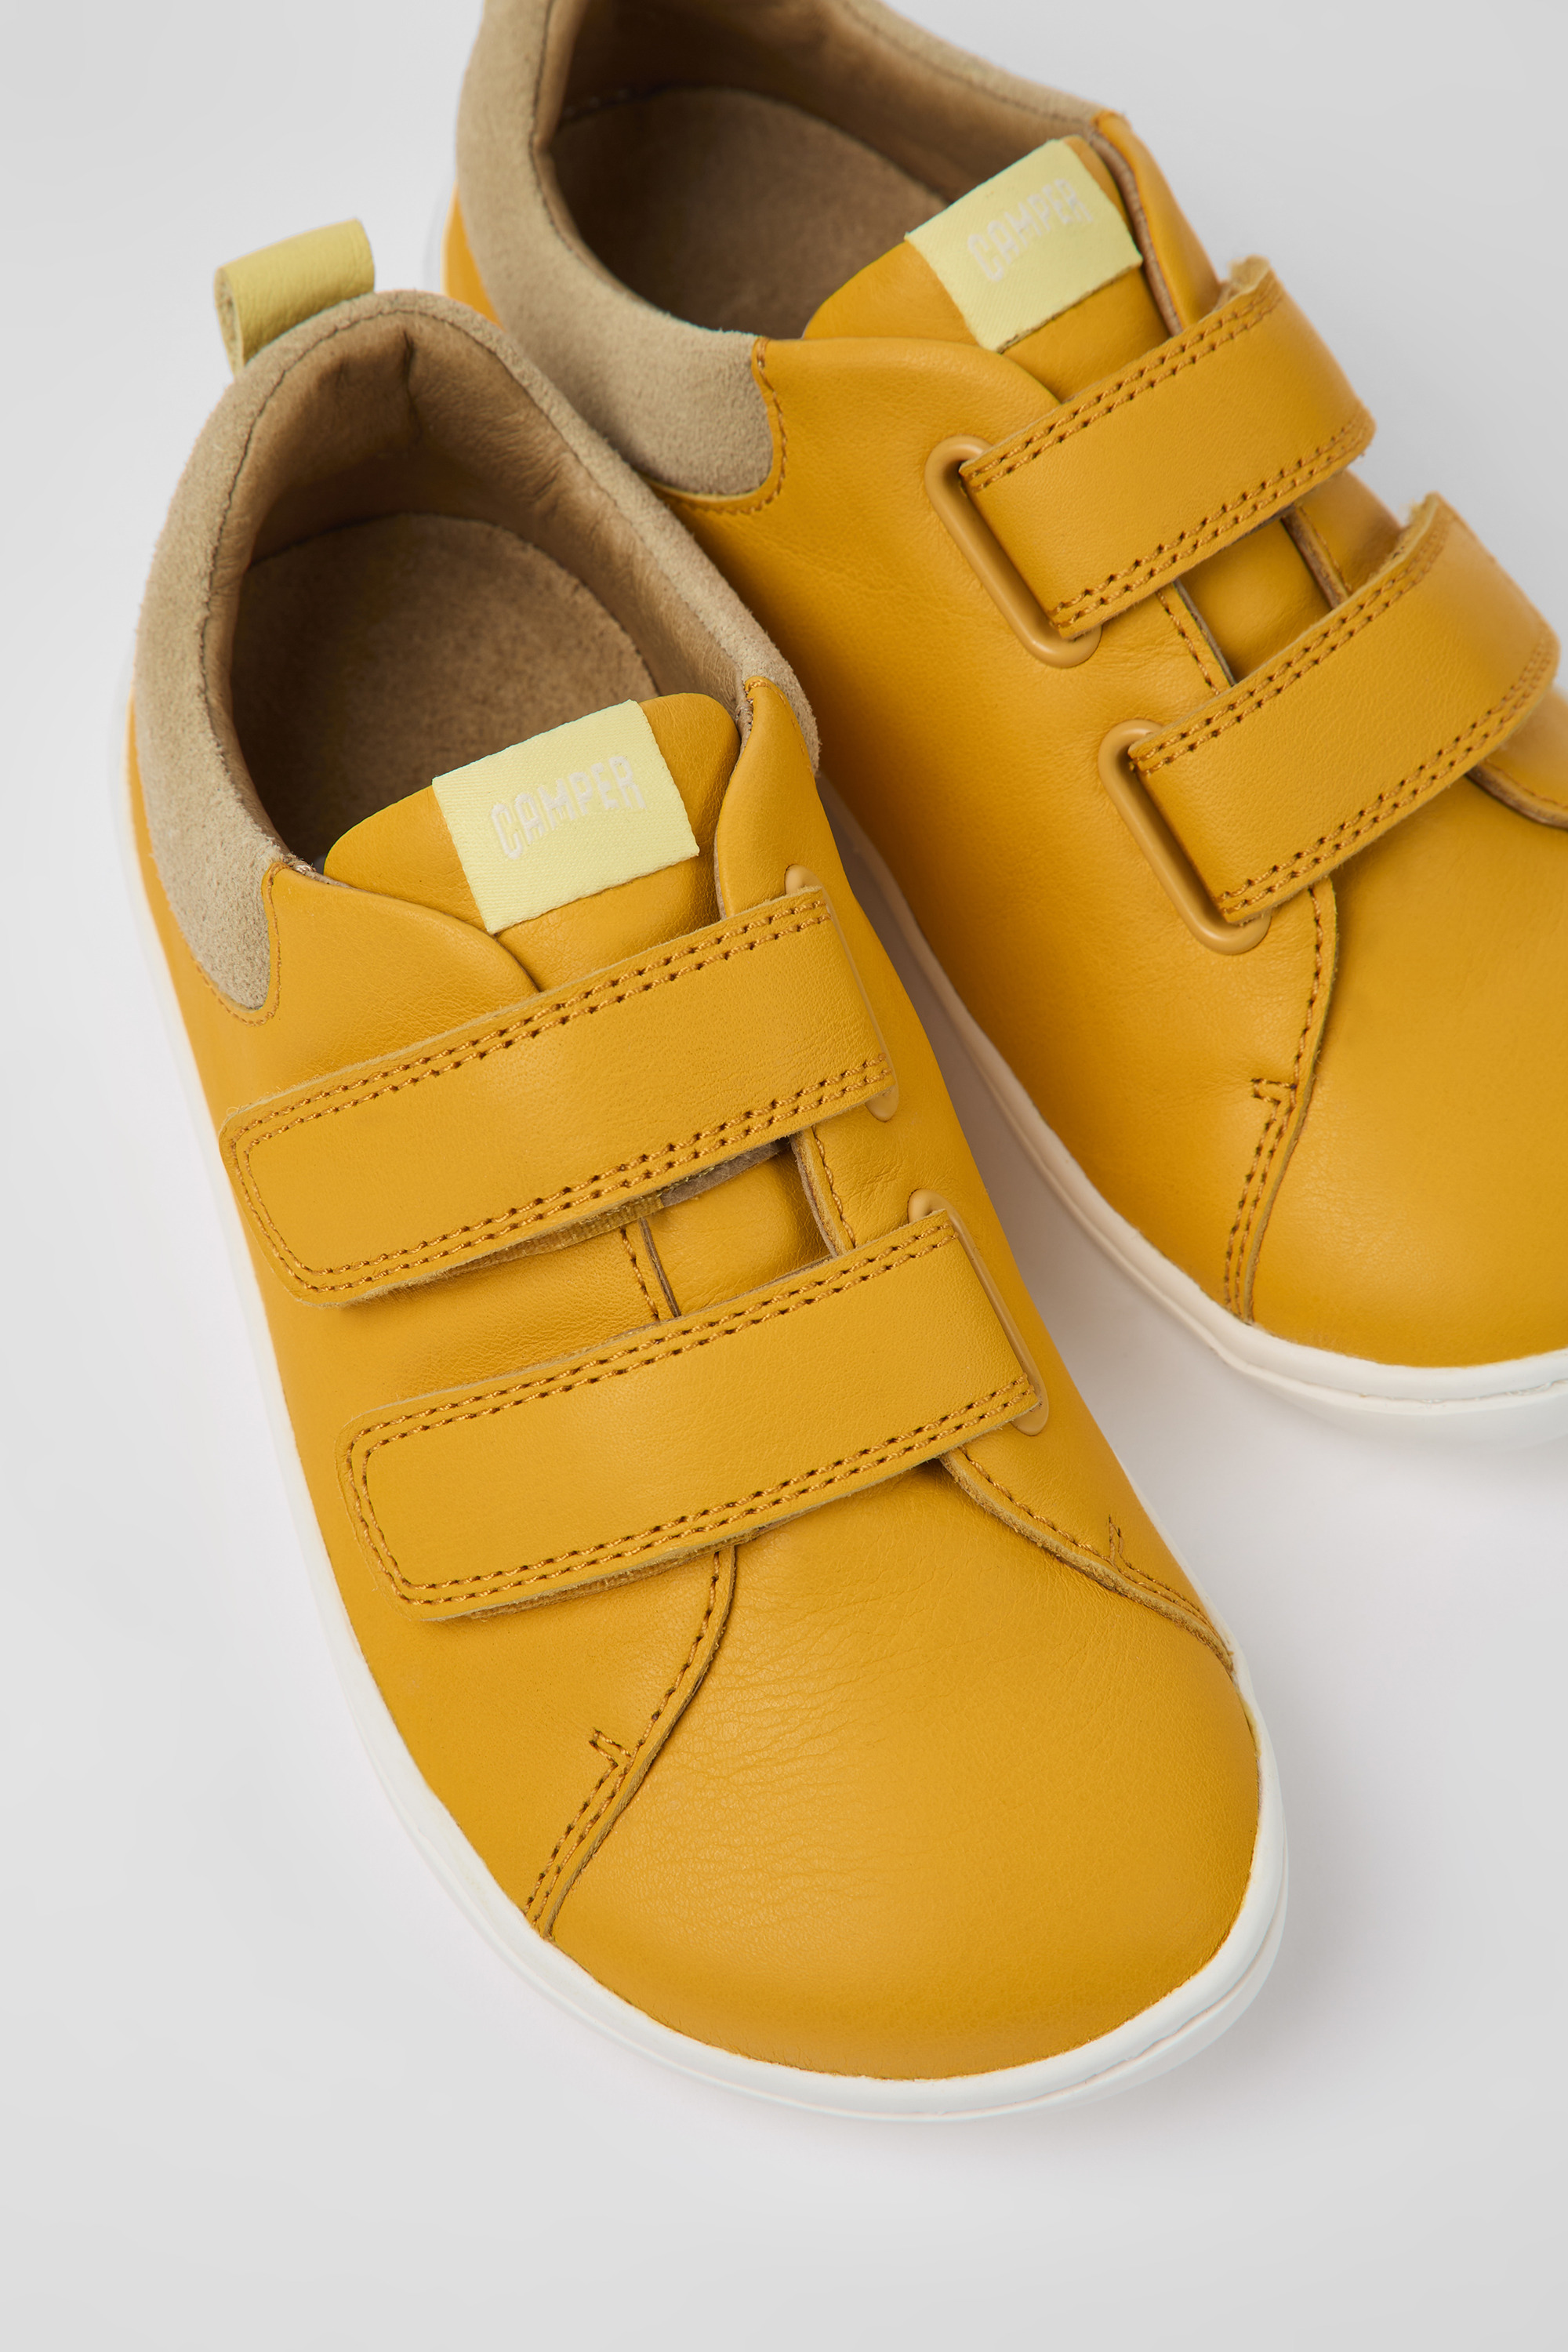 Render Articulation Ungdom Peu Orange Sneakers for Kids - Autumn/Winter collection - Camper USA